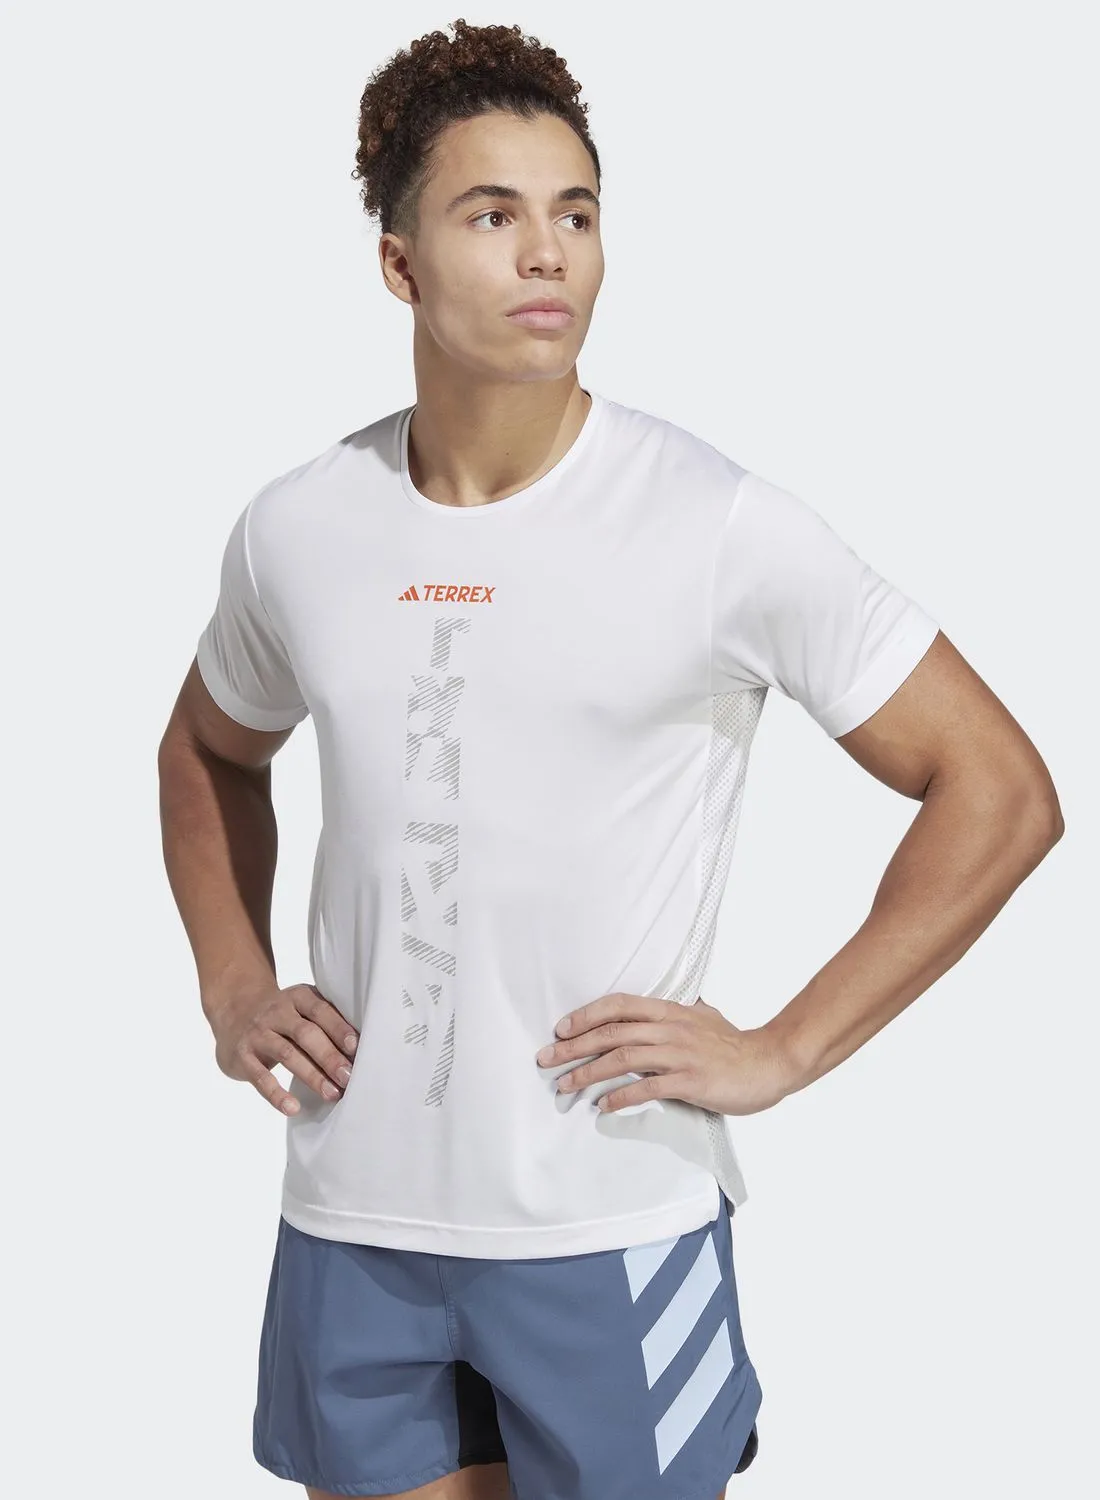 Adidas Agravic T-shirt